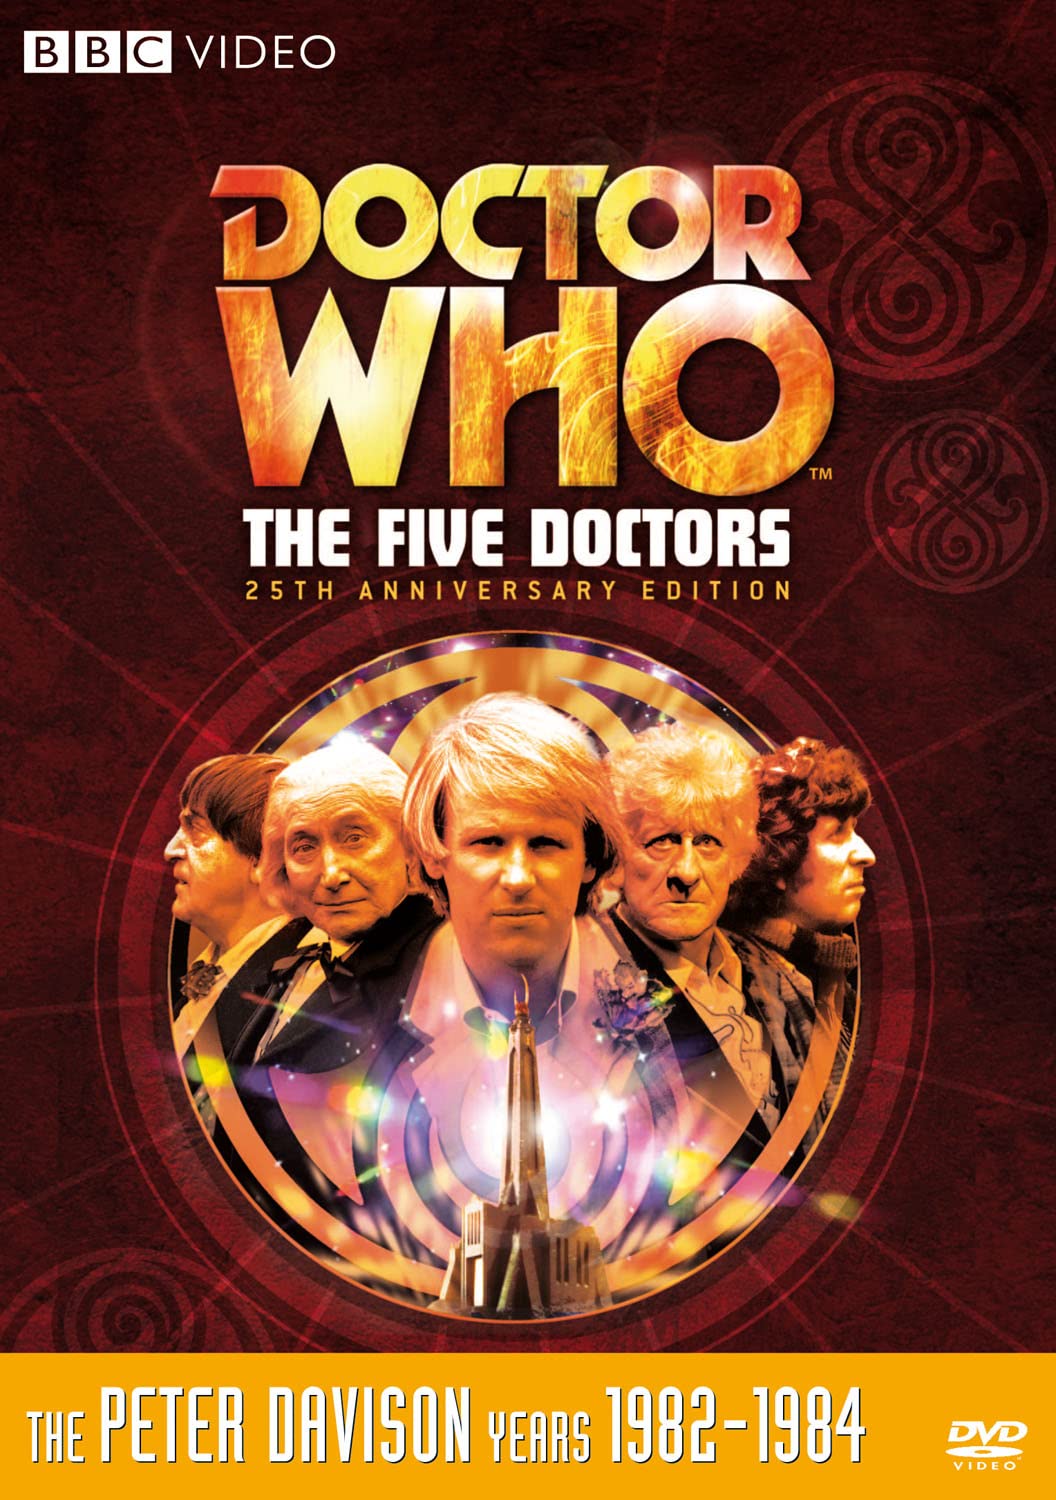 The Five Doctors (1983) starring William Hartnell, Patrick Troughton, Jon Pertwee, Tom Baker, Jon Davison